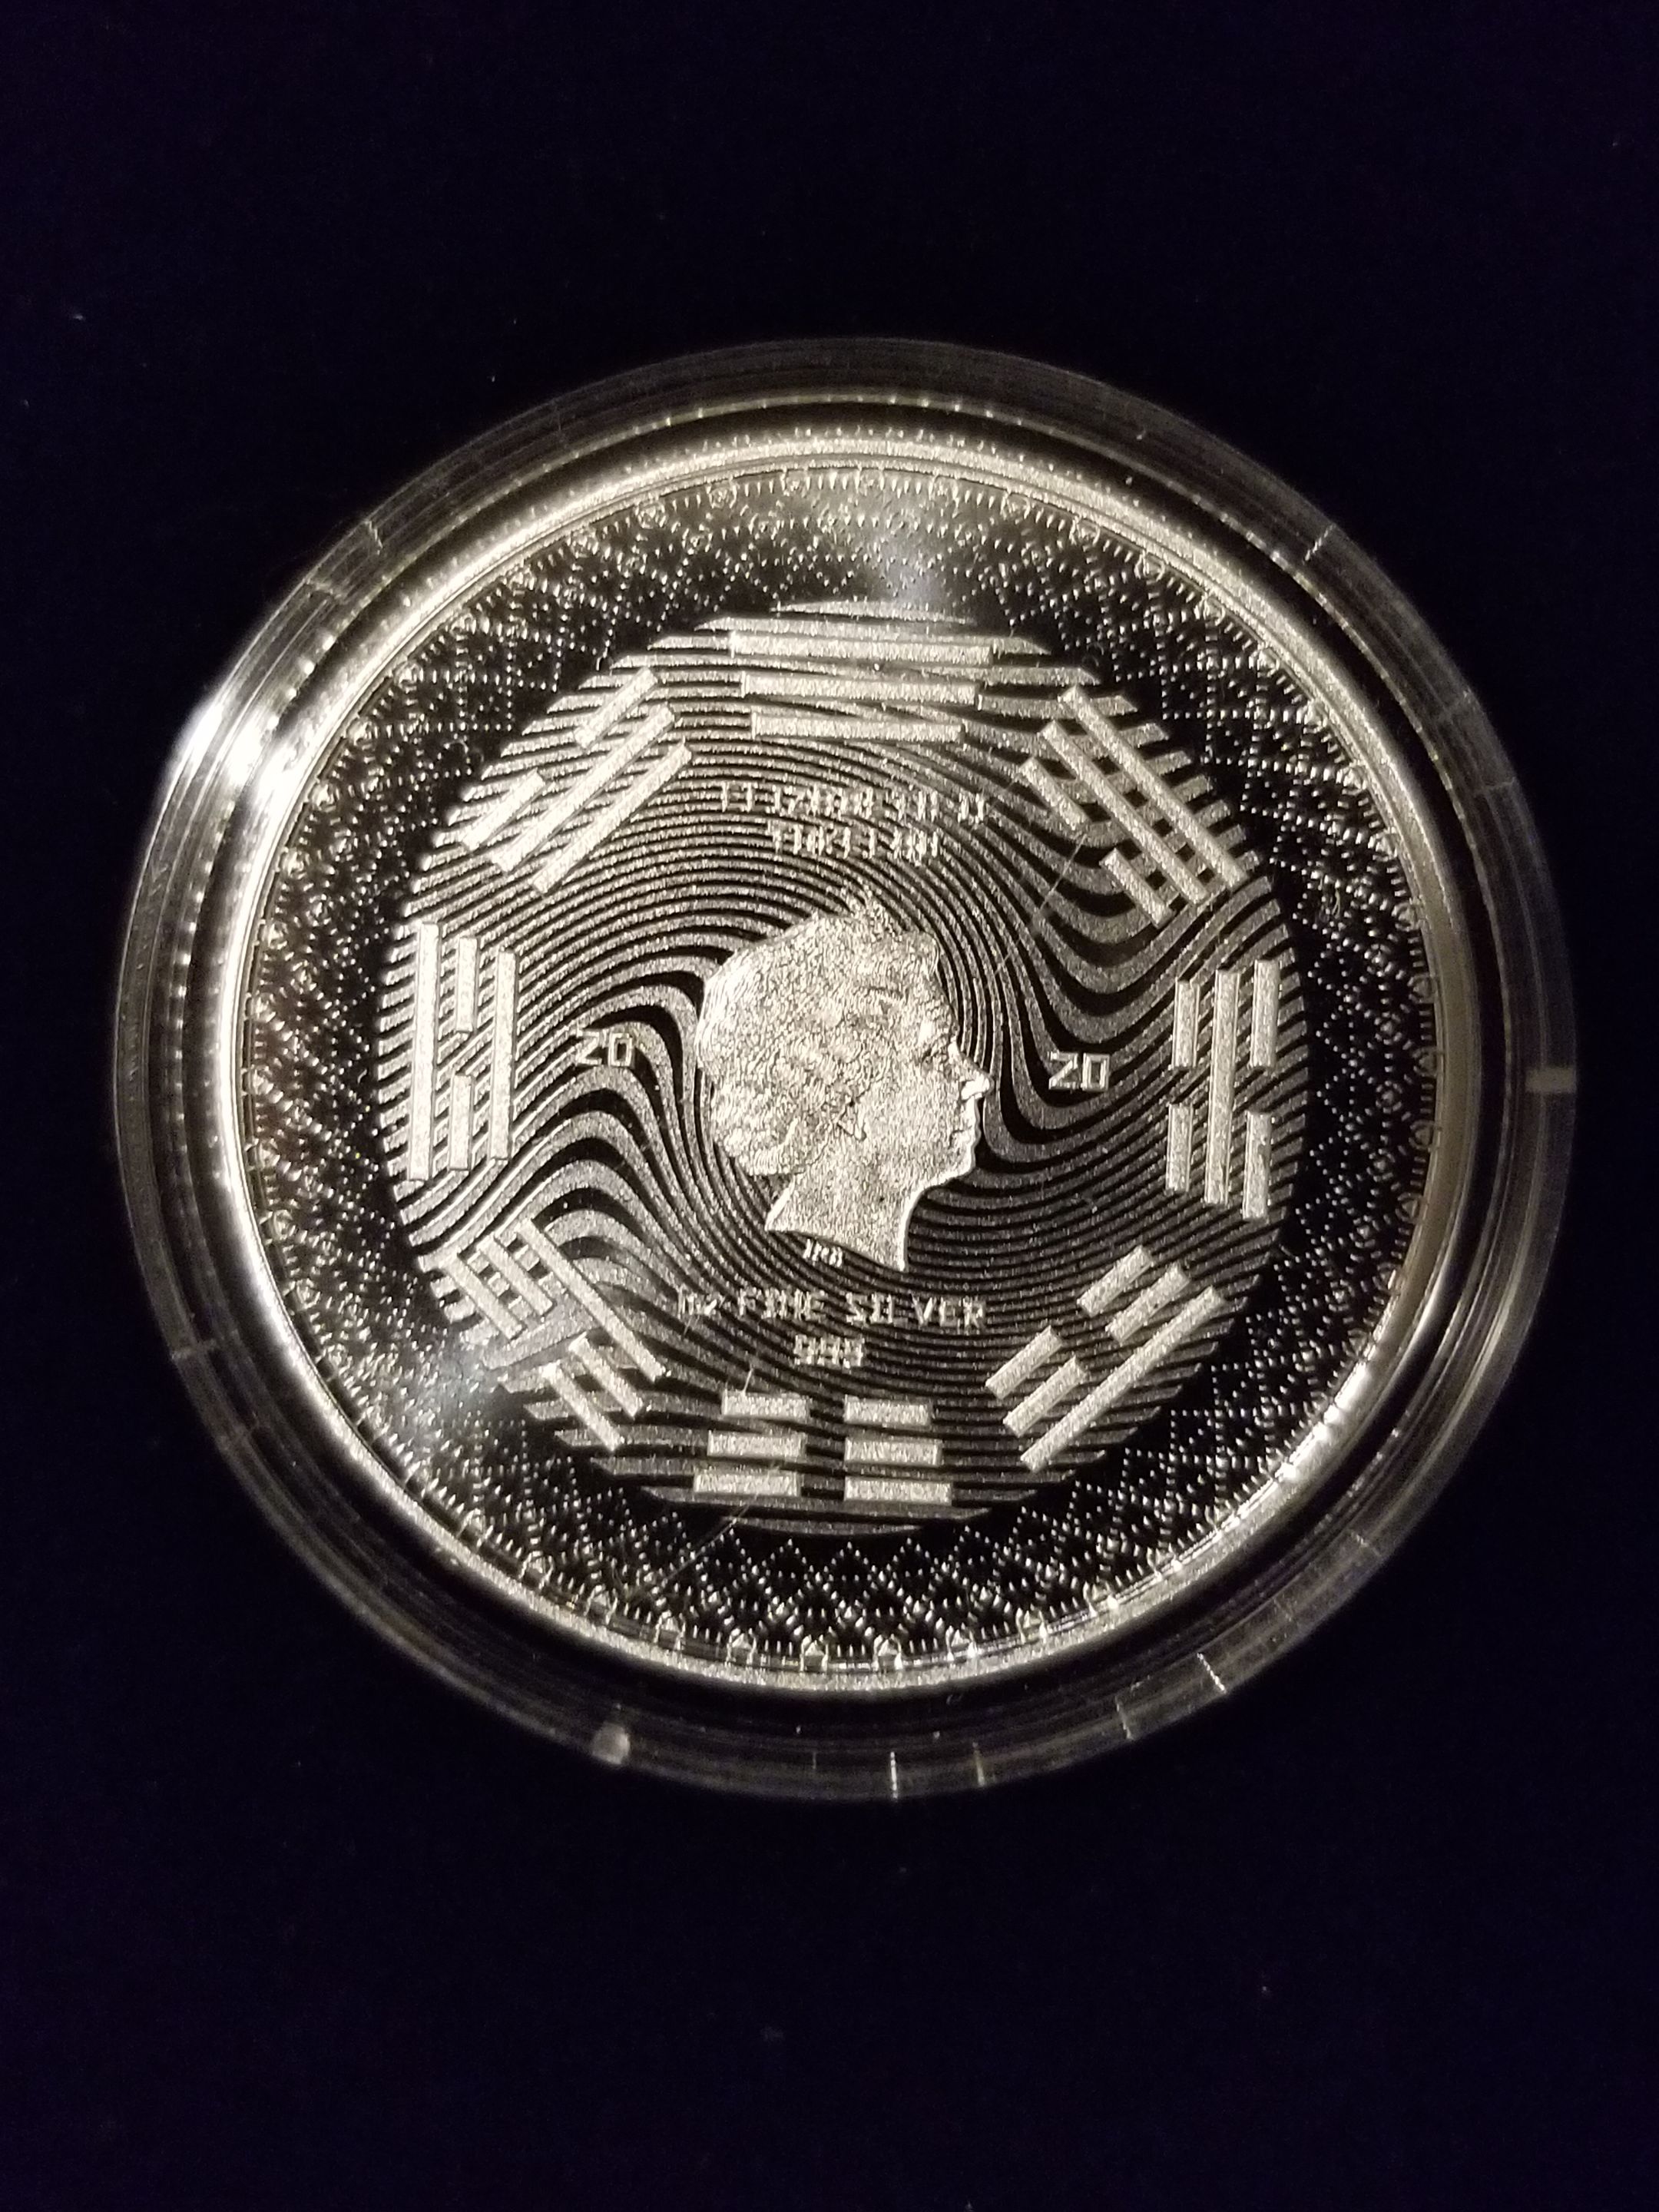 @maddogmike/2020-tokelau-dollar5-1-oz-equilibrium-proof-like-silver-coin